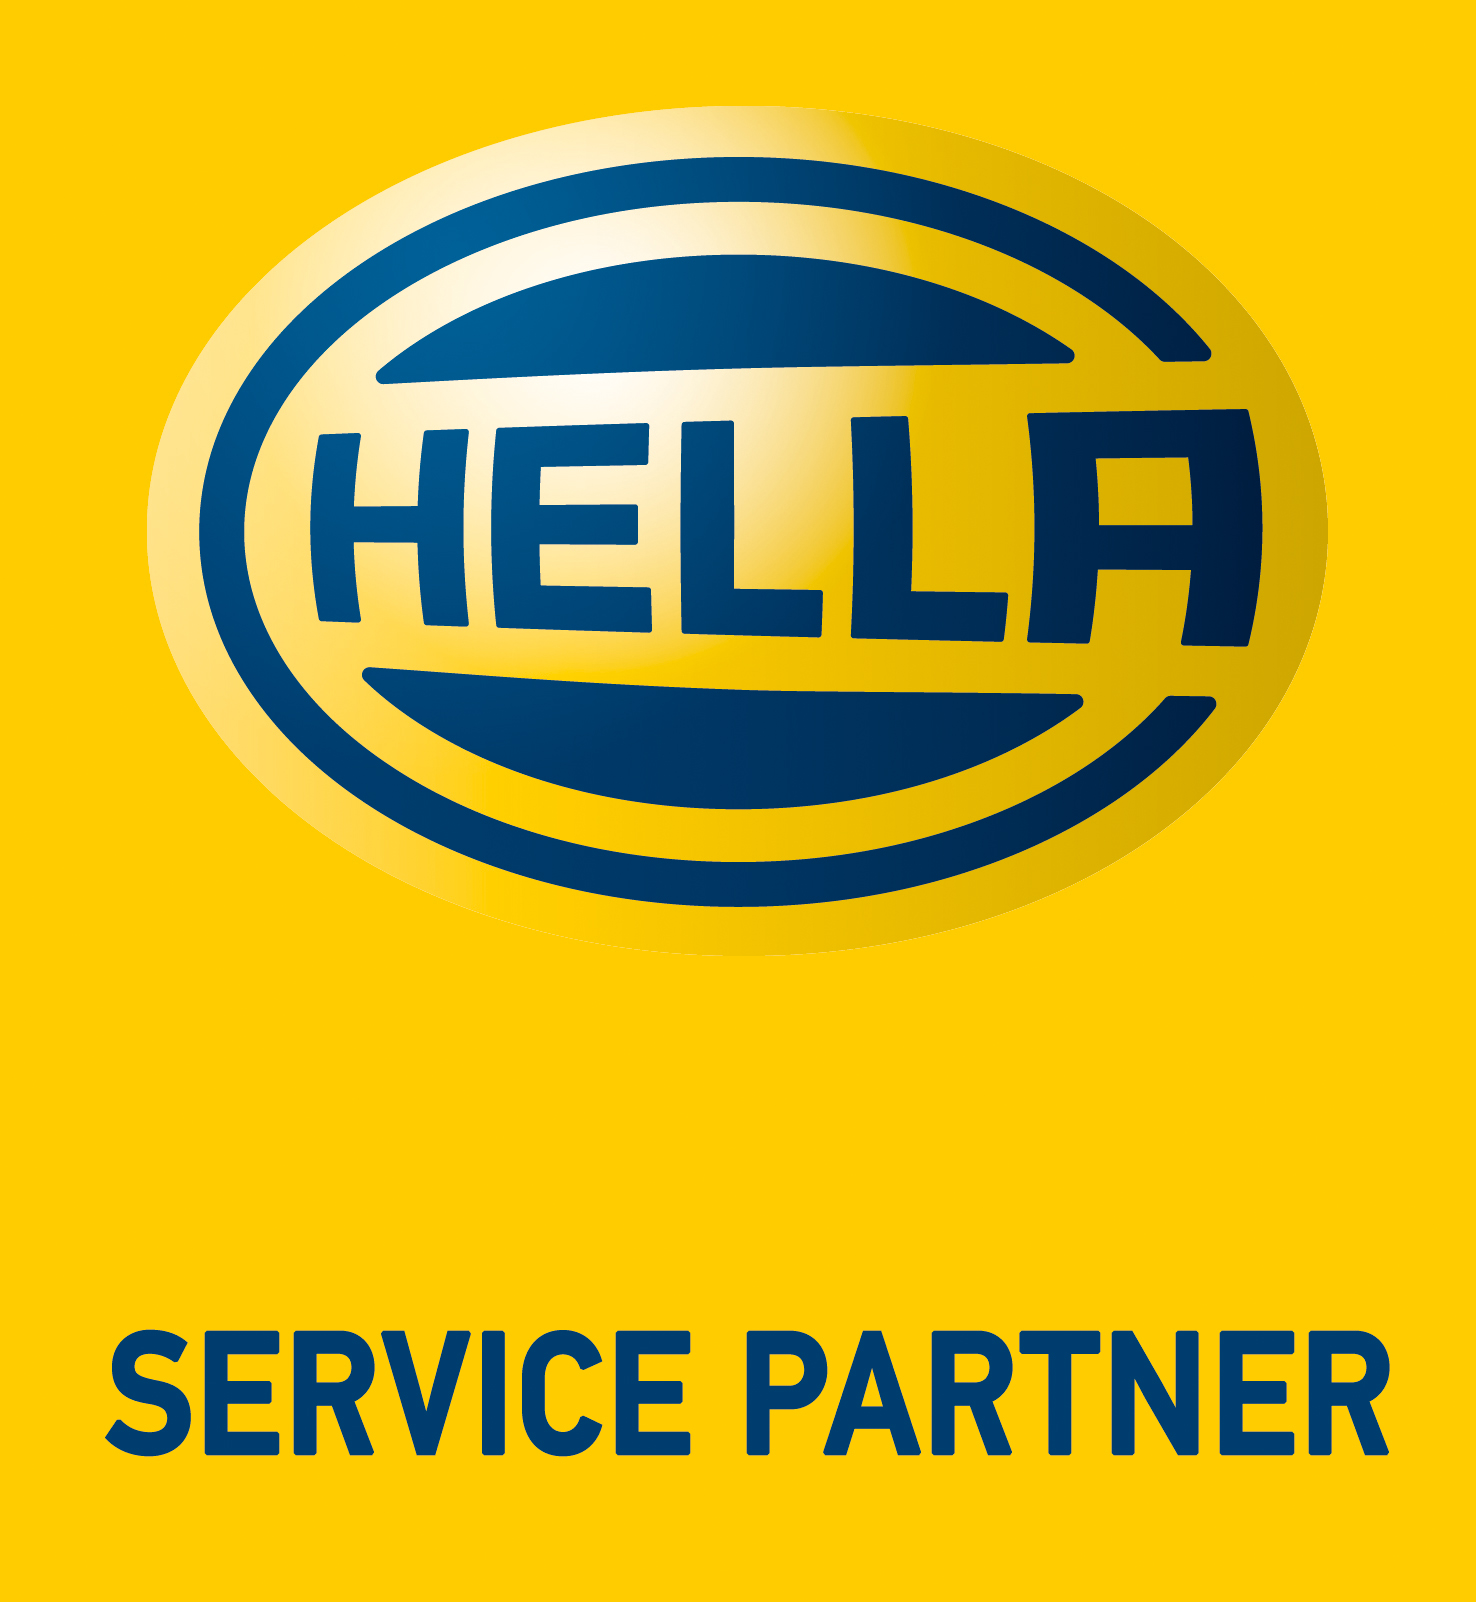 OK Bilservice ApS - Hella Service Partner logo